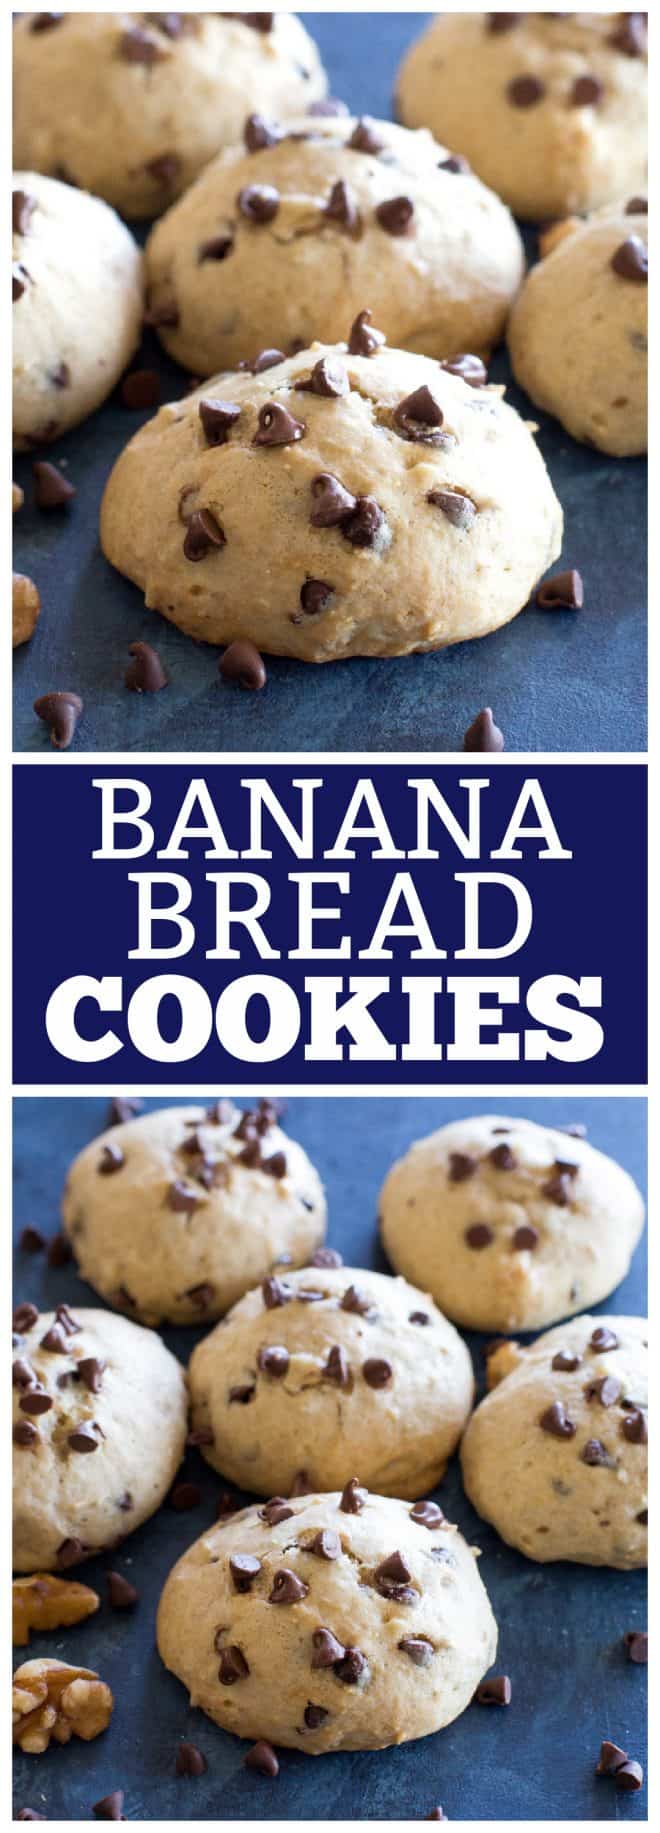 fb image - Banana Bread Cookies